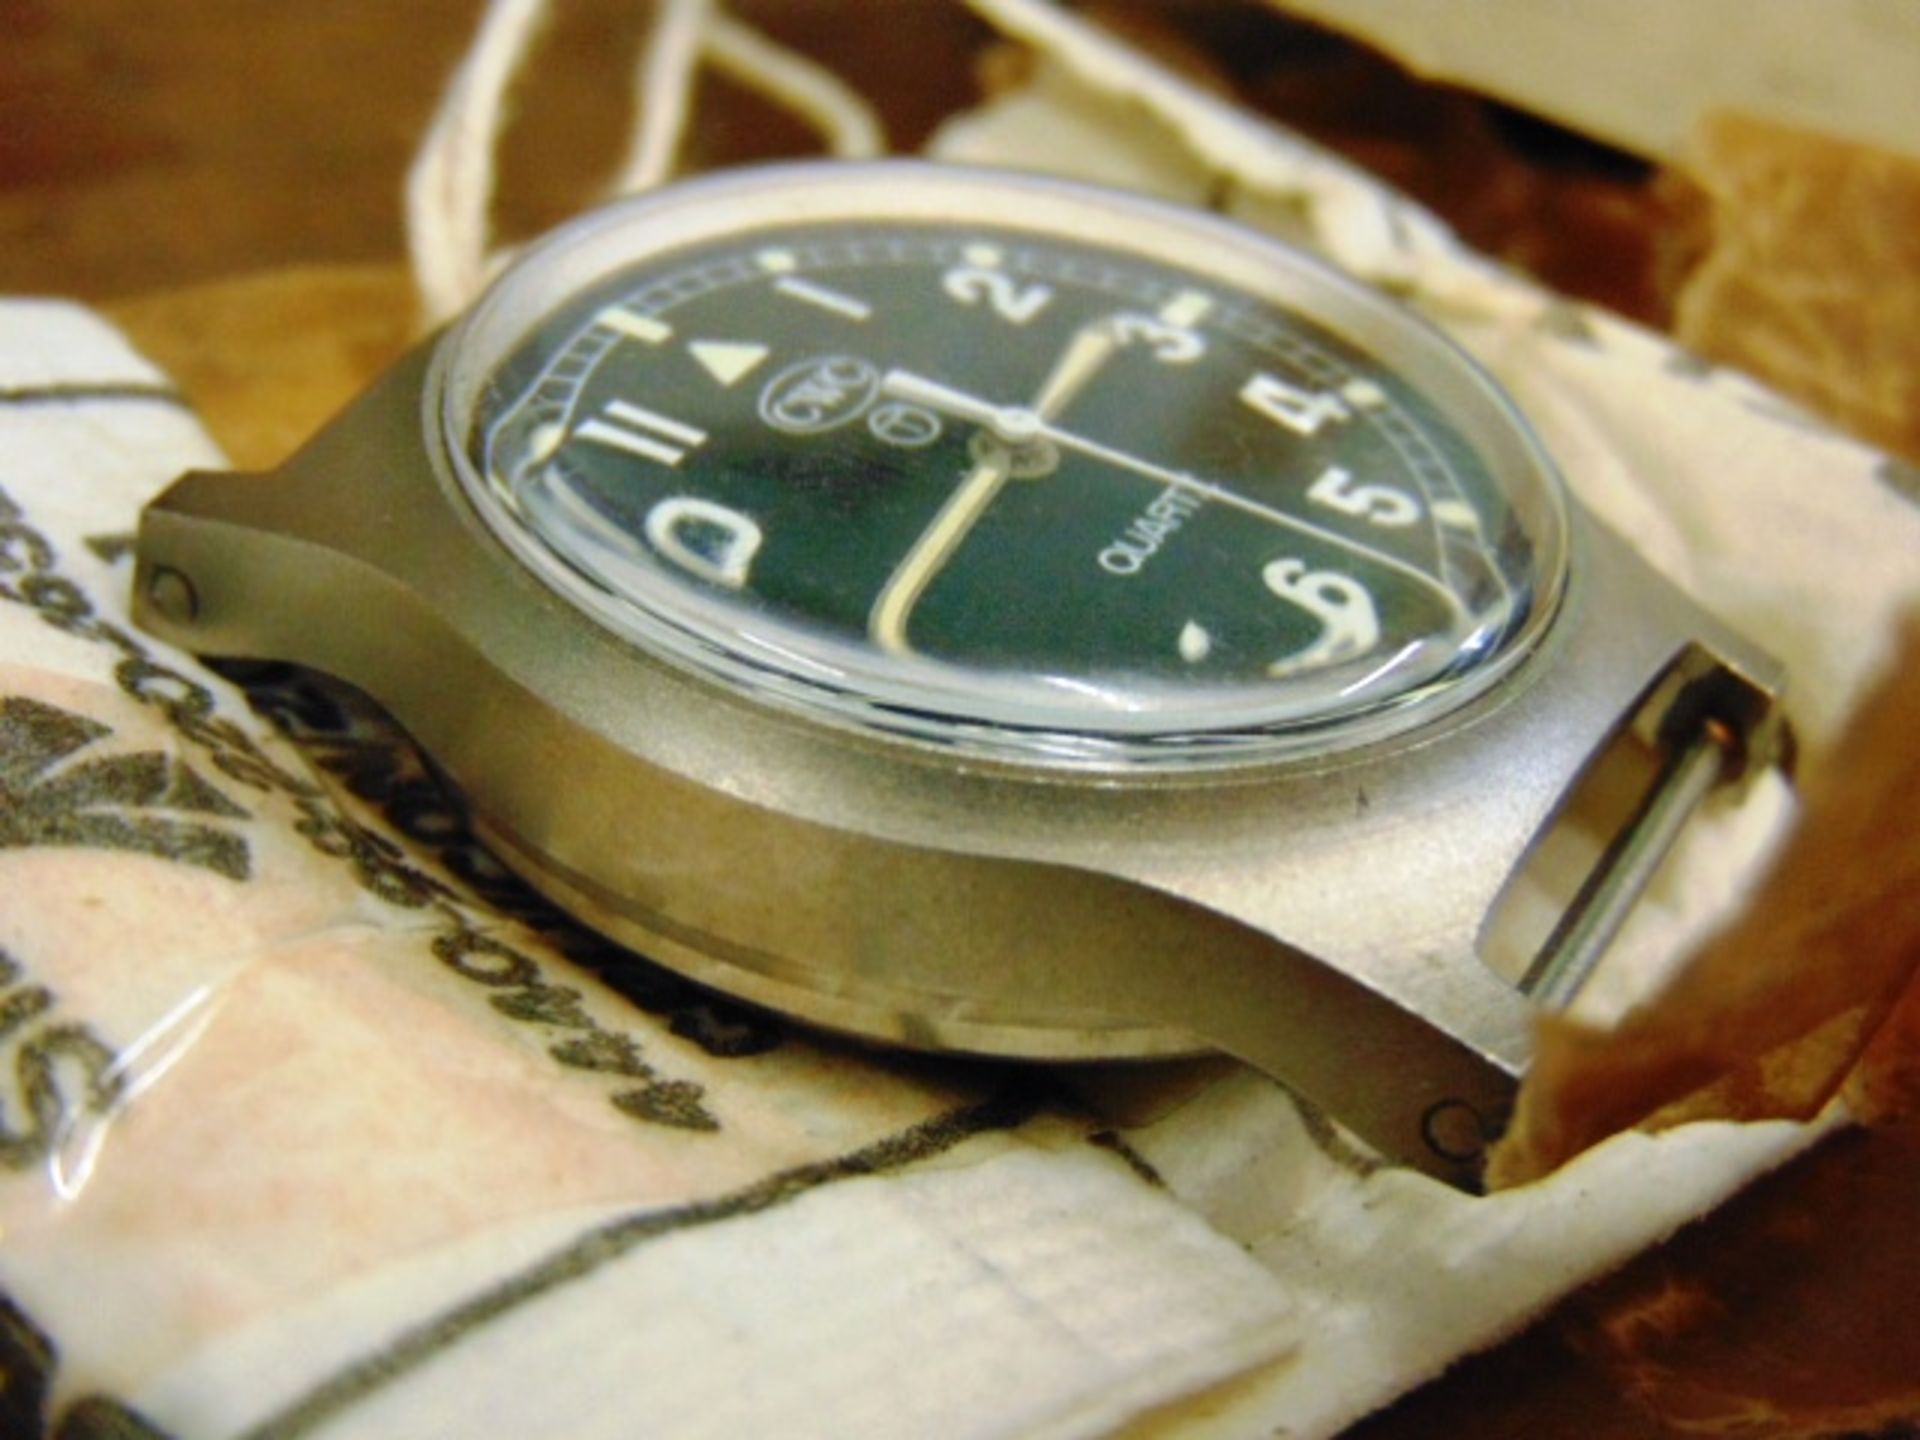 Unissued CWC (Fat Boy/Fat Case) quartz wrist watch with original box - Image 4 of 5